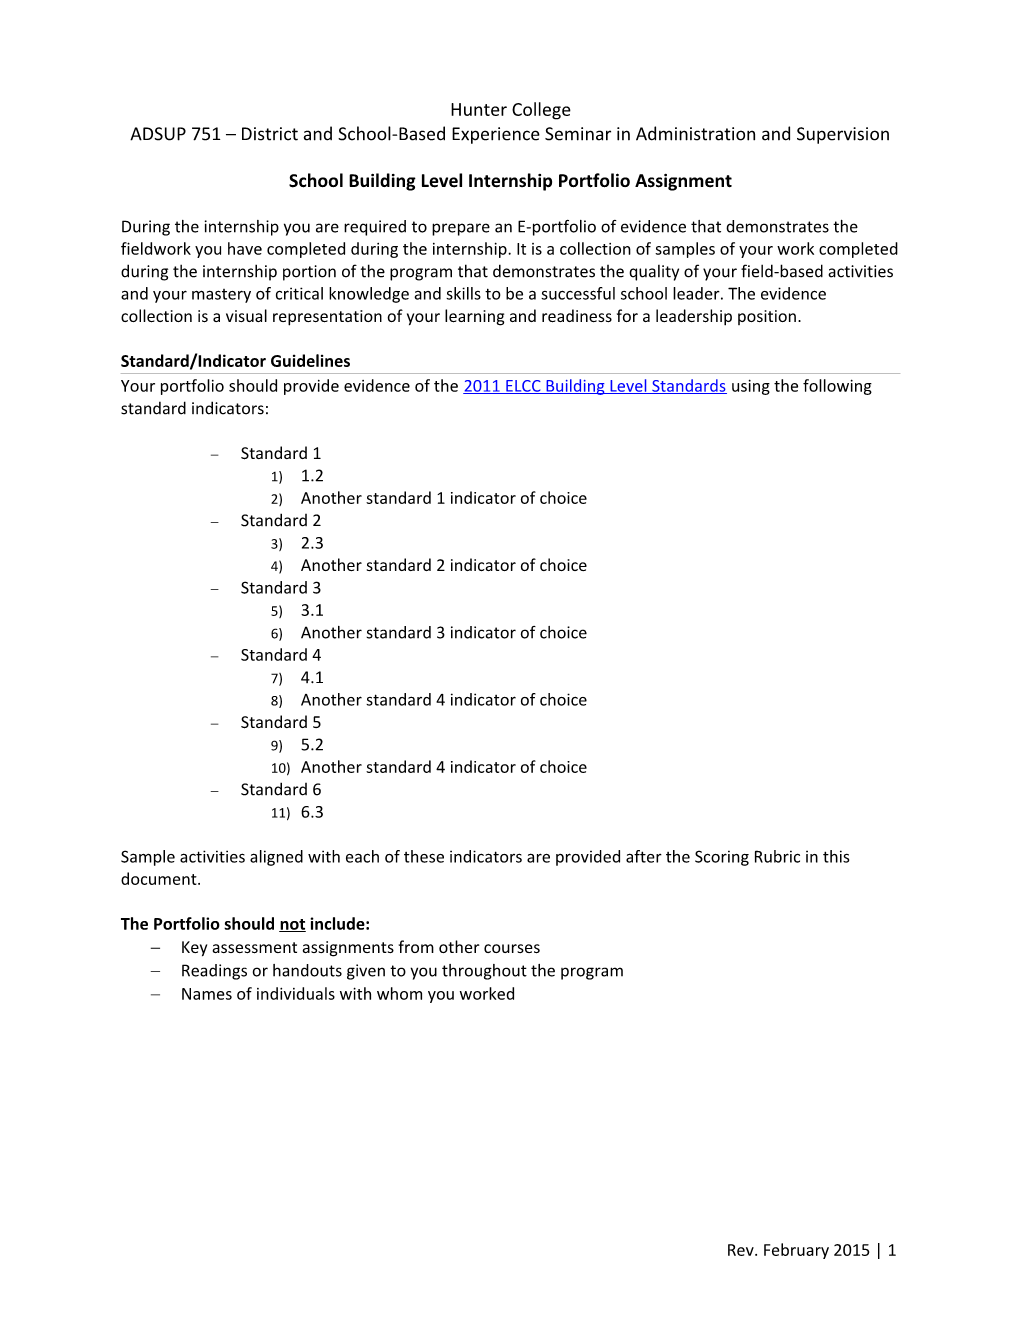 School Building Level Internship Portfolio Assignment